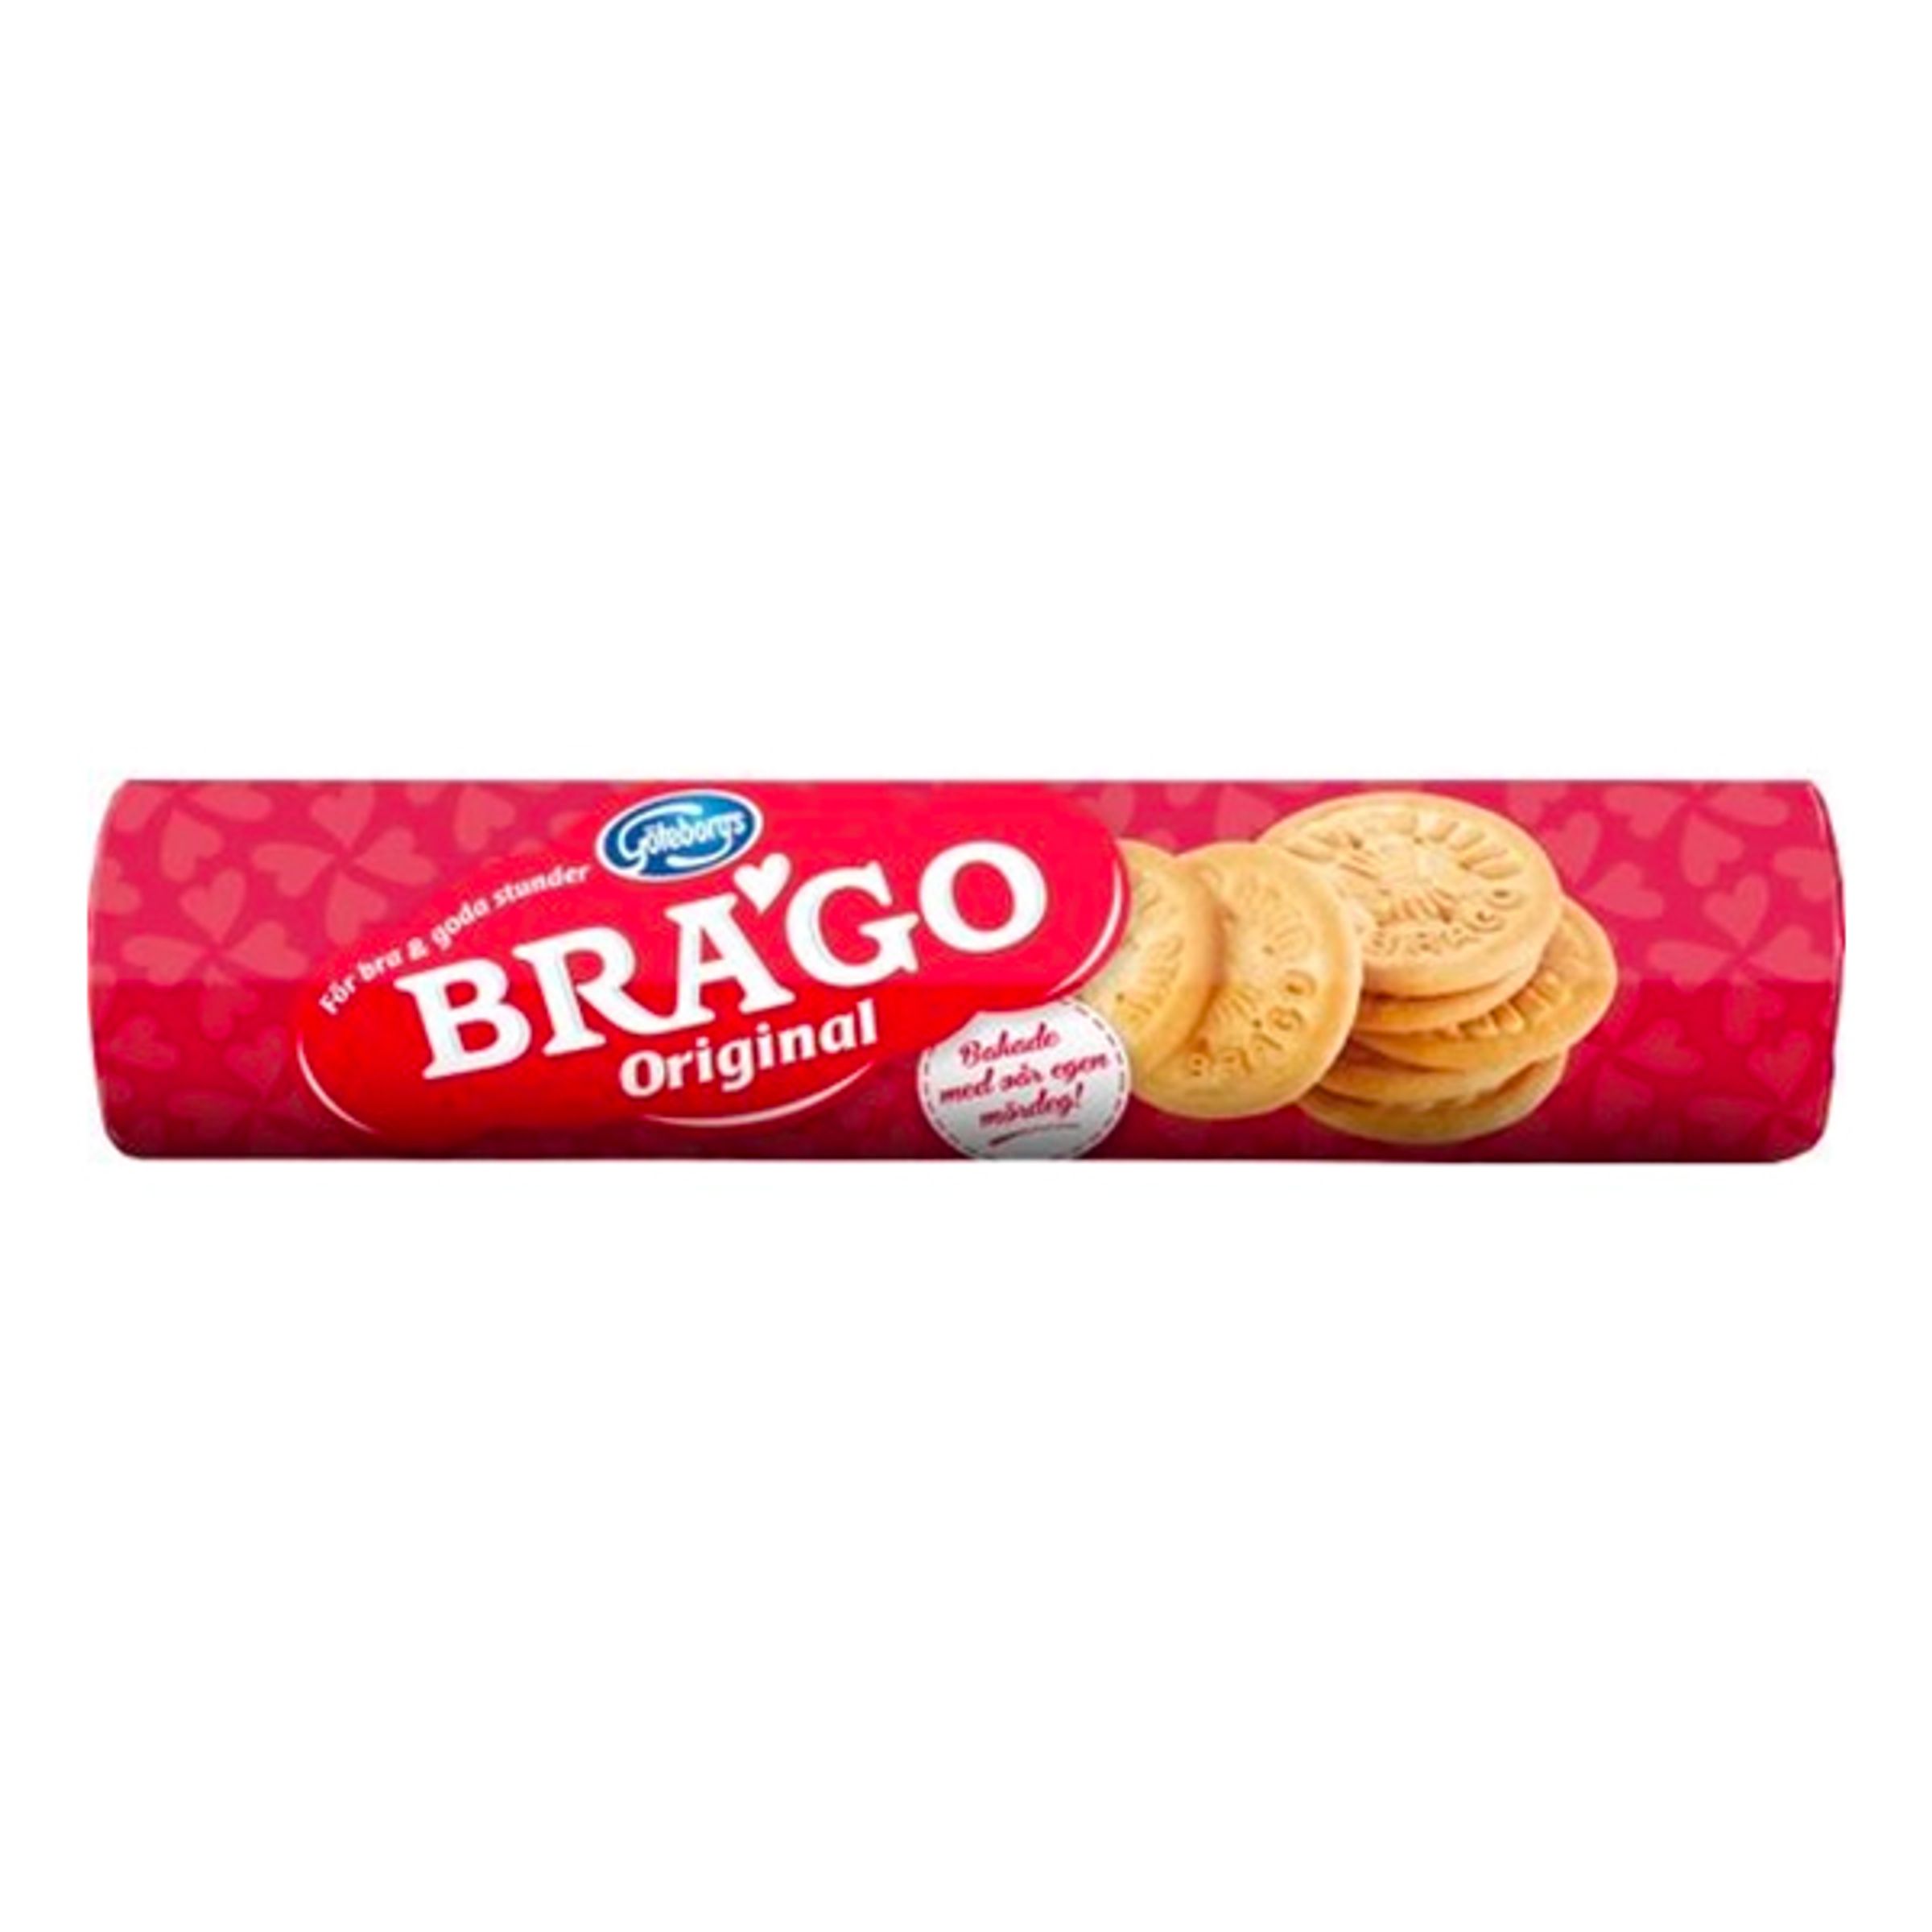 Brago Kex Original - 225 gram